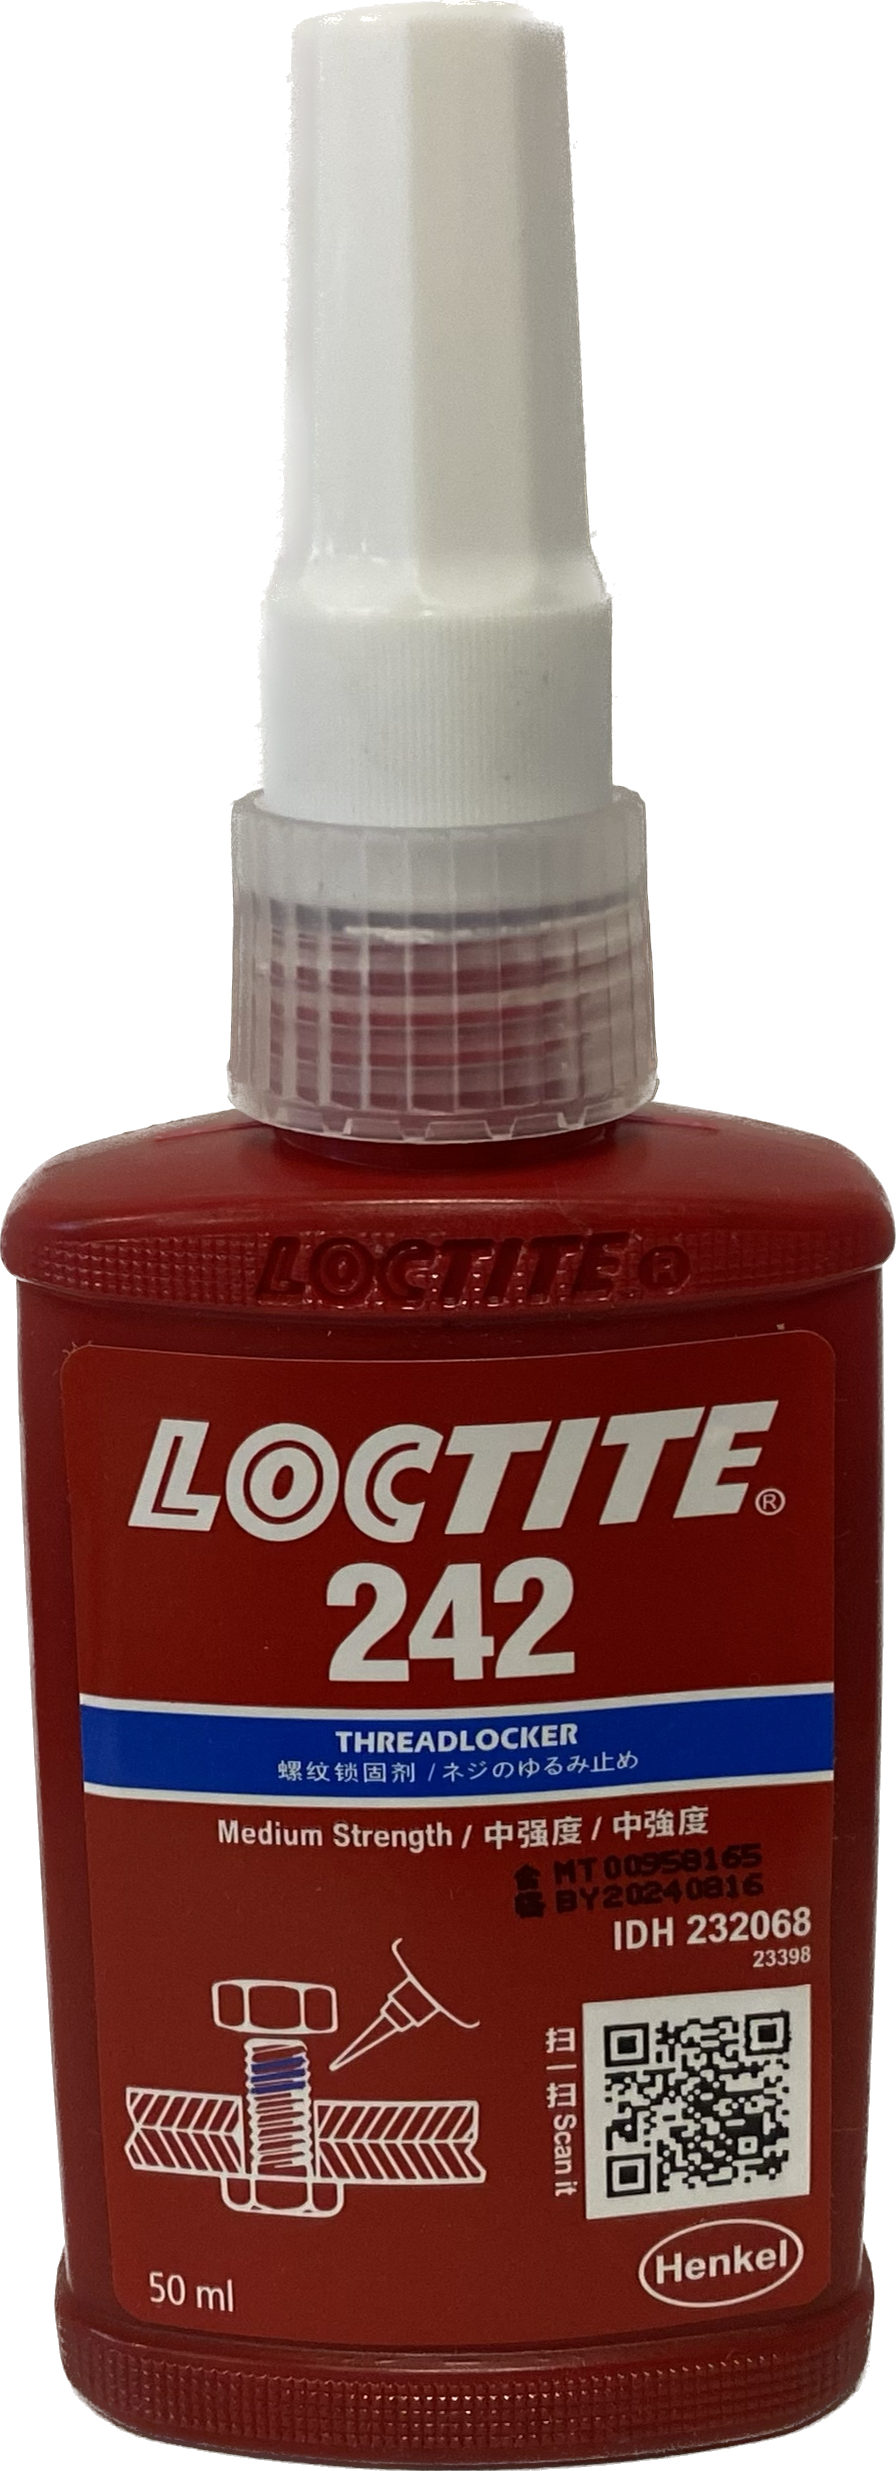 Loctite 242 Medium Strength Blue Thread Locker 50ml